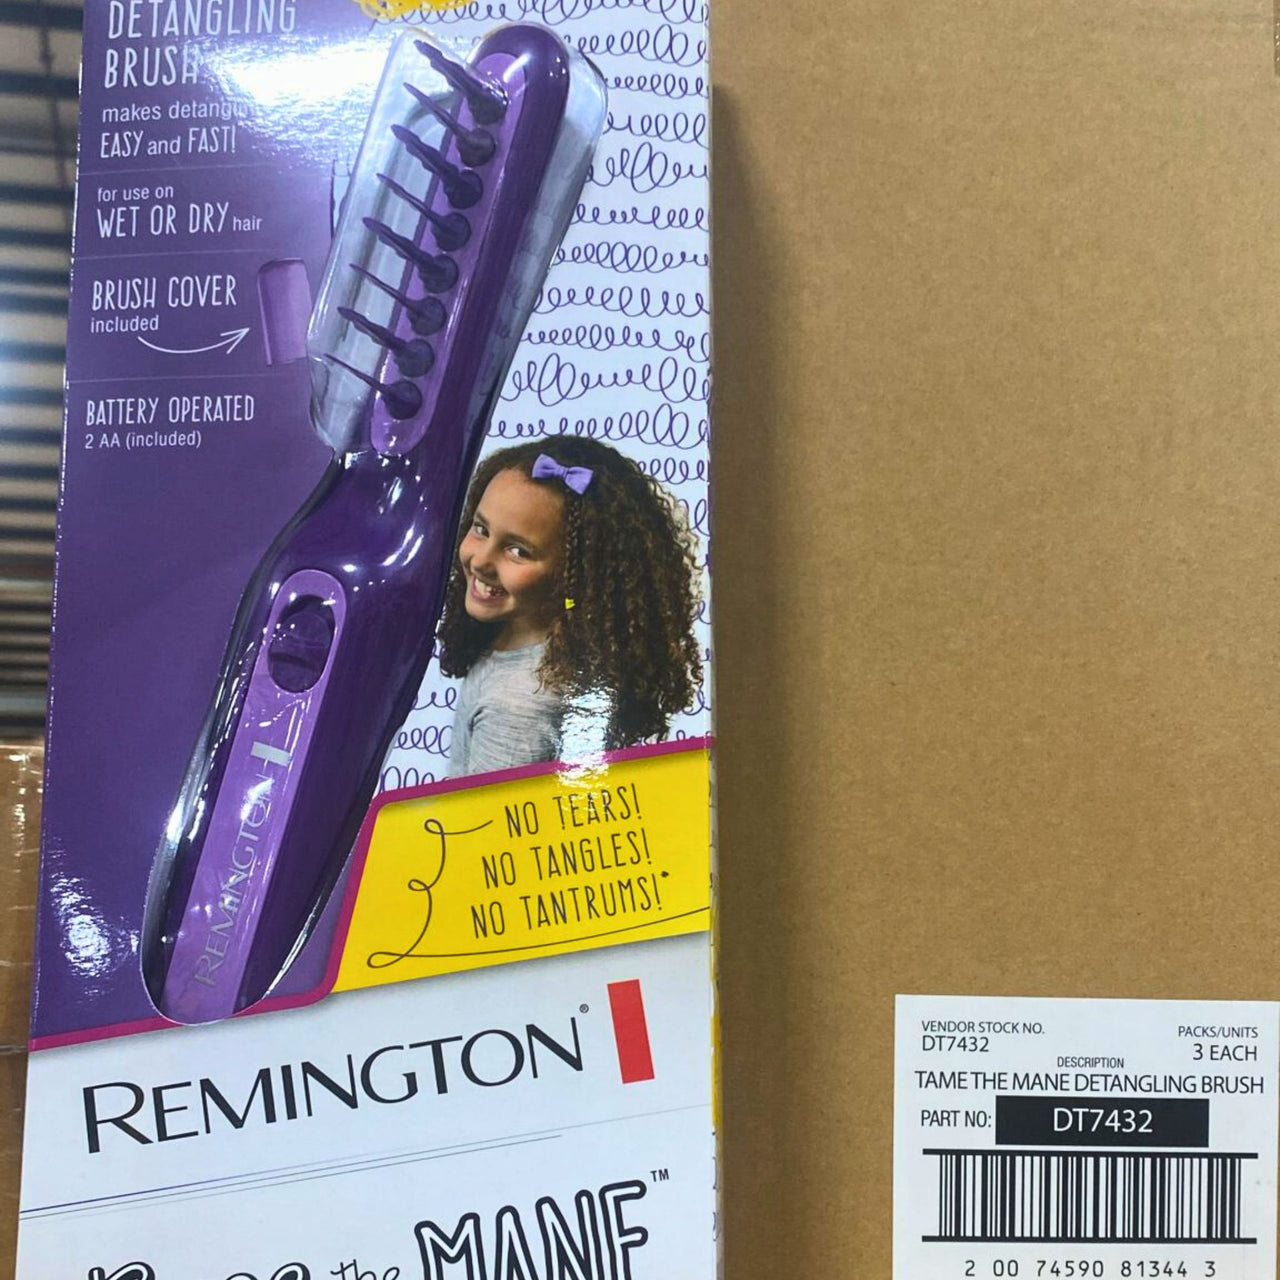 Remington Tame The Mane Electric Detangling Brush 